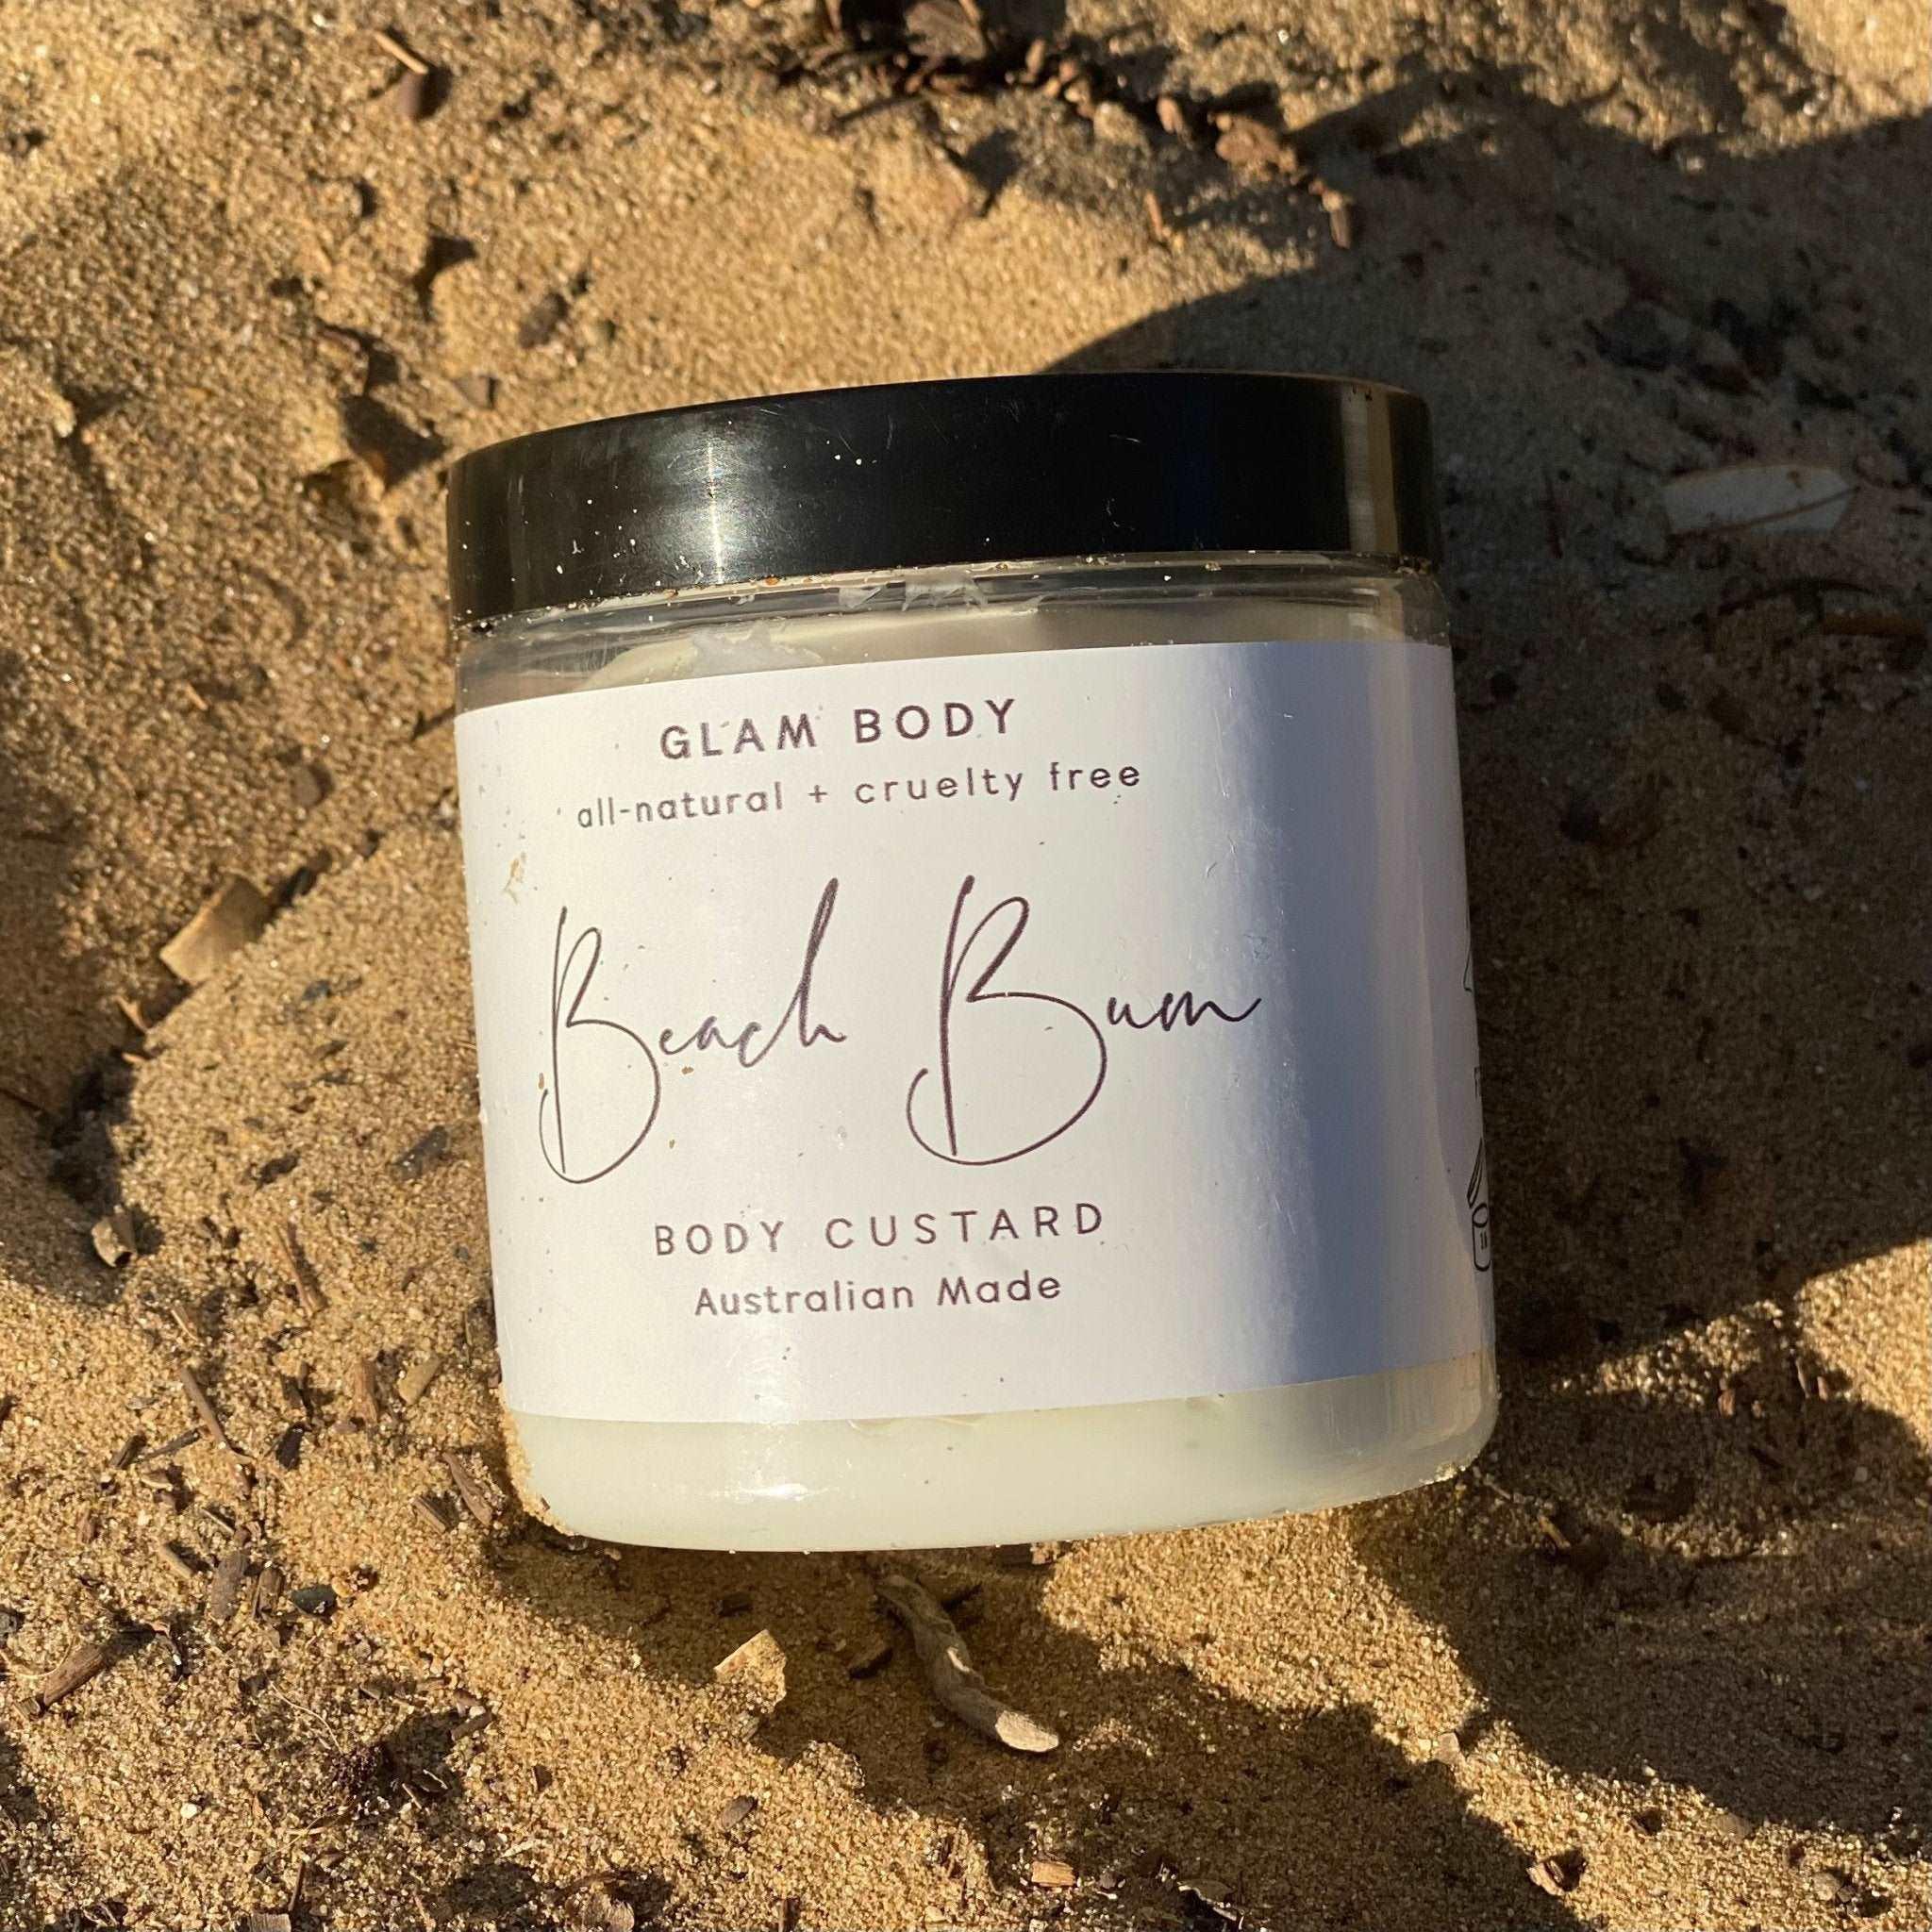 BEACH BUM BODY CUSTARD - Glam Body